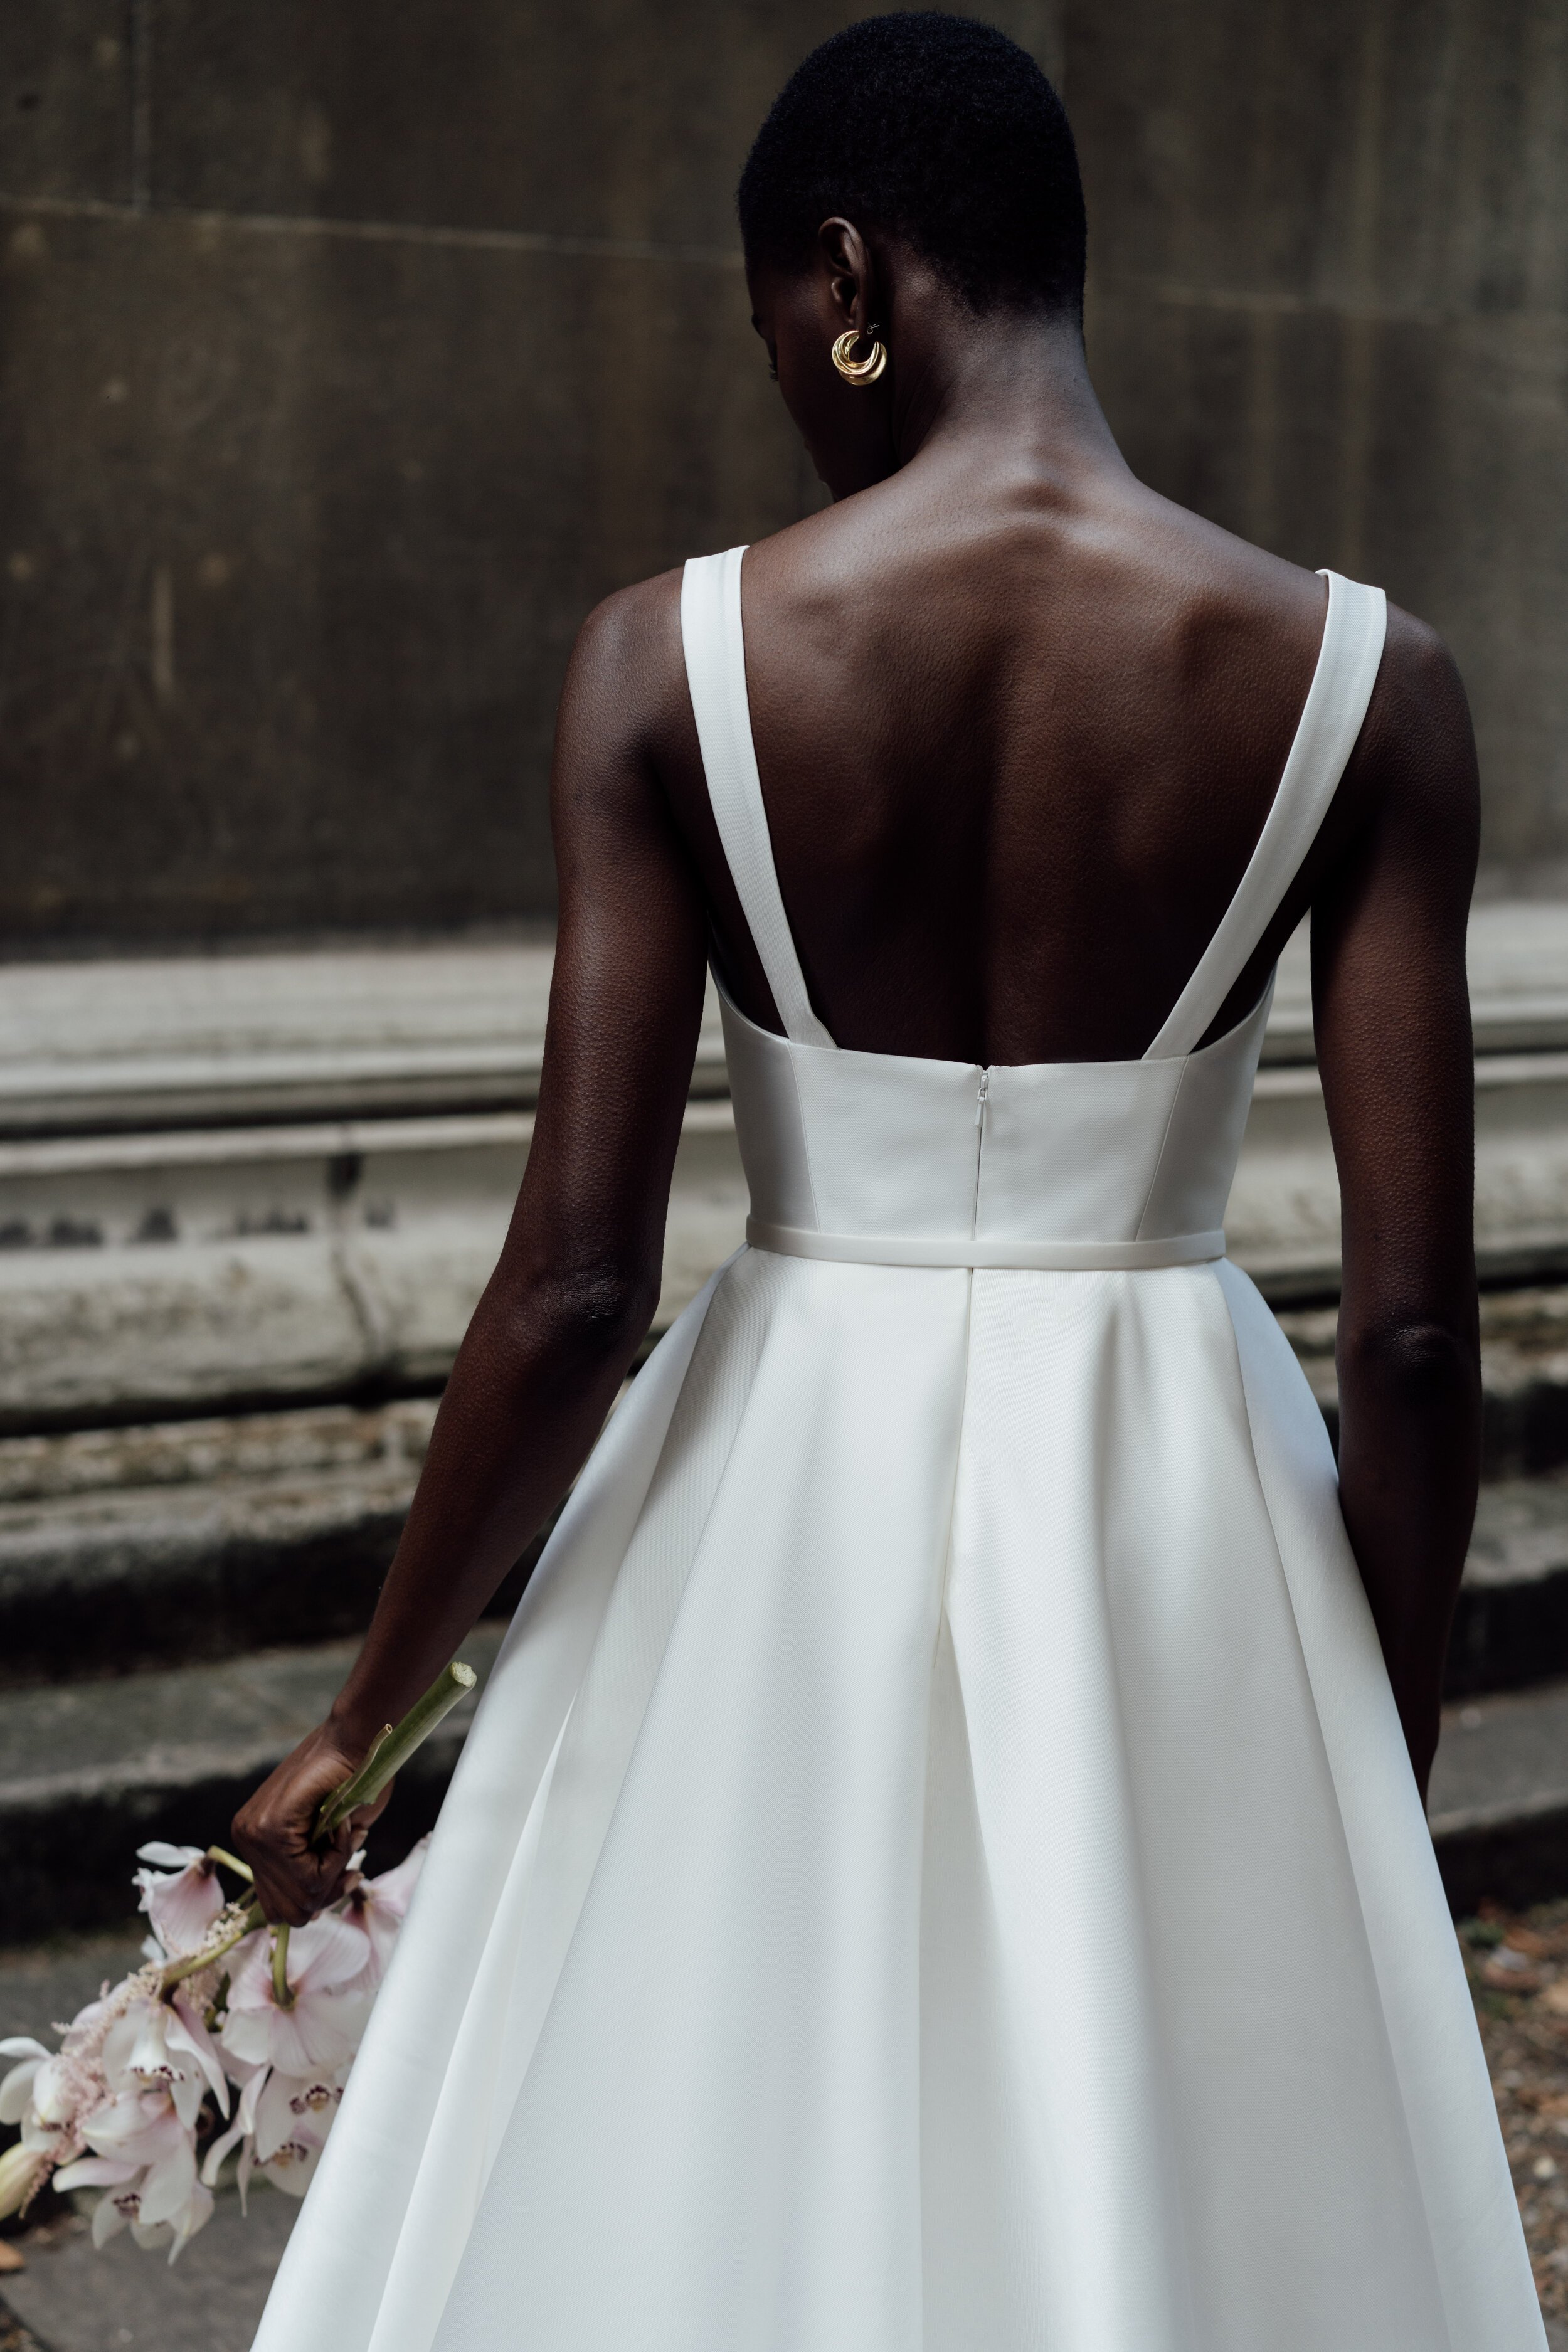 Dahlia Dress — Halfpenny London Wedding dresses and separates in London